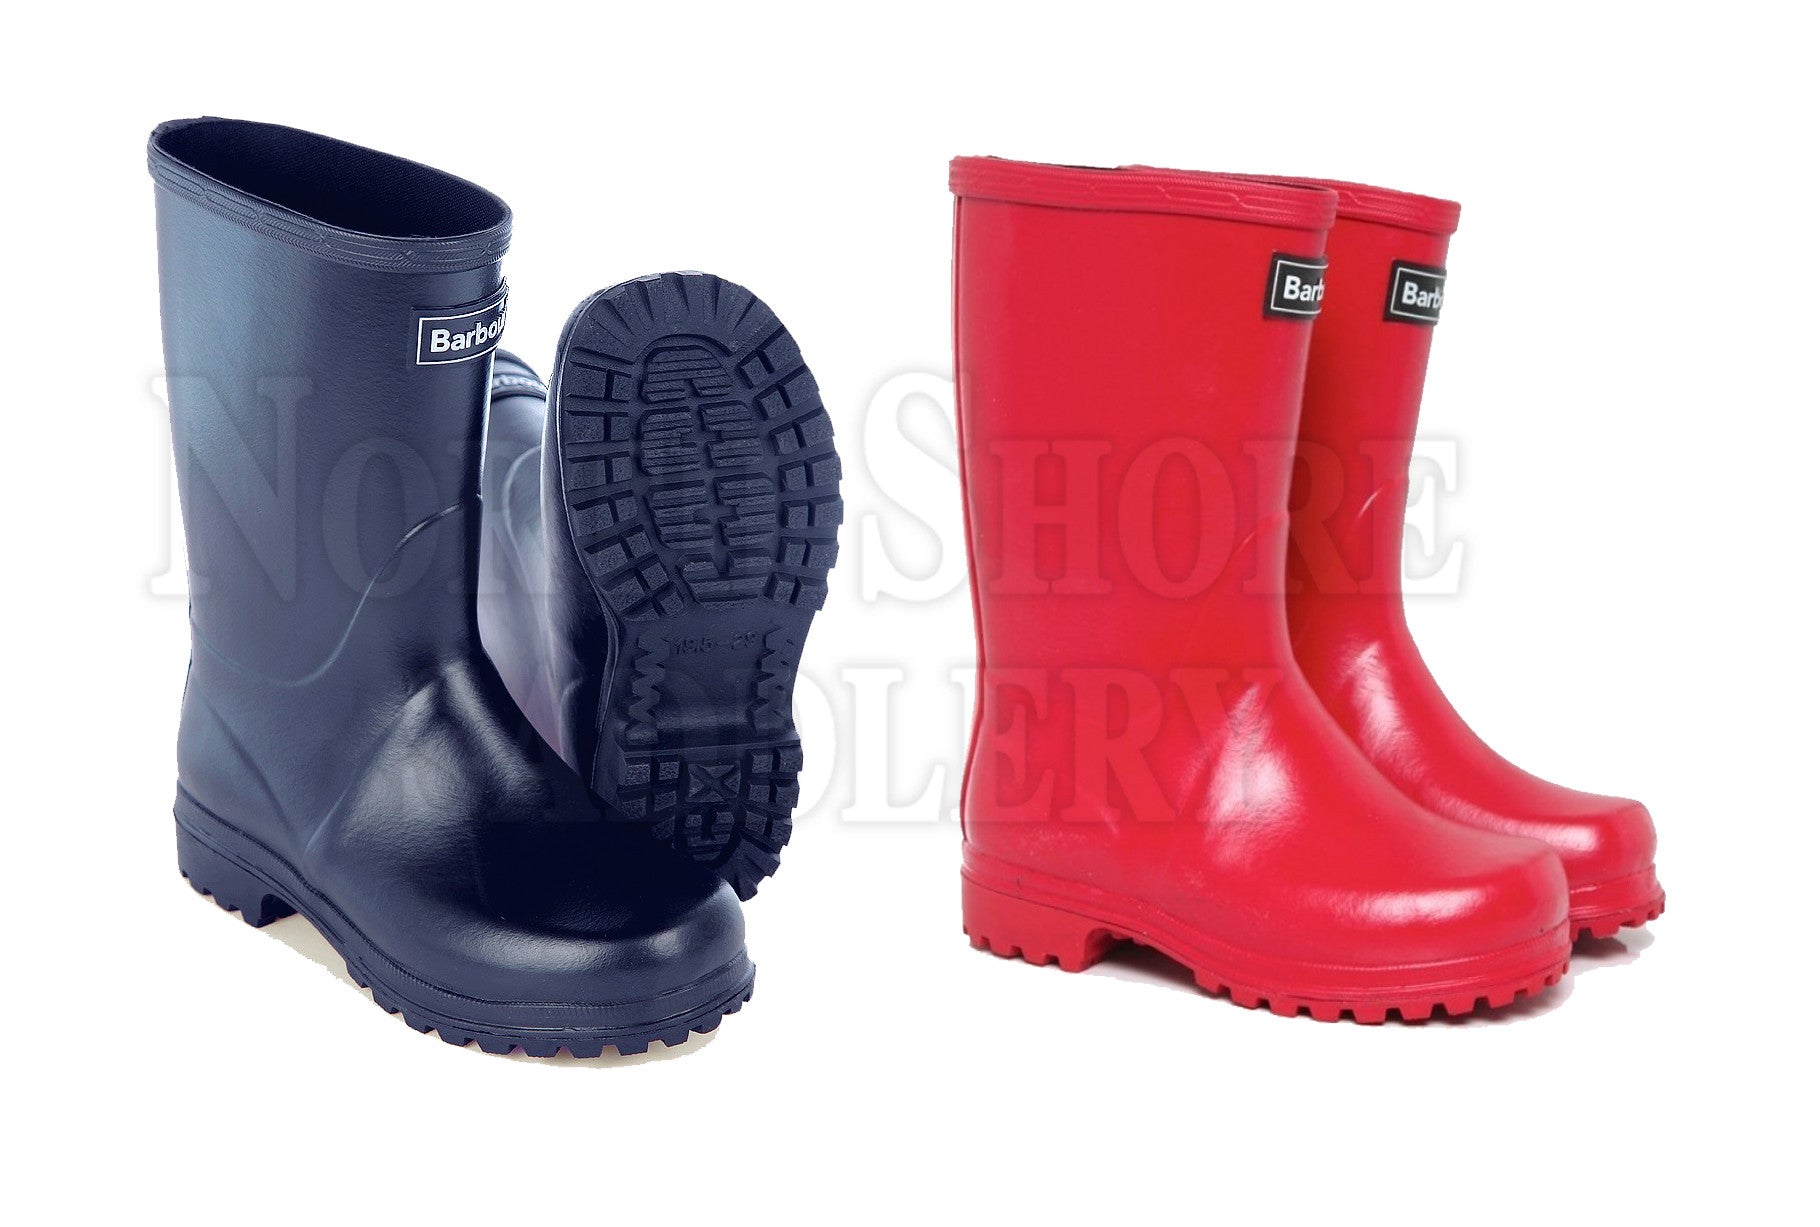 wellington boots for sale